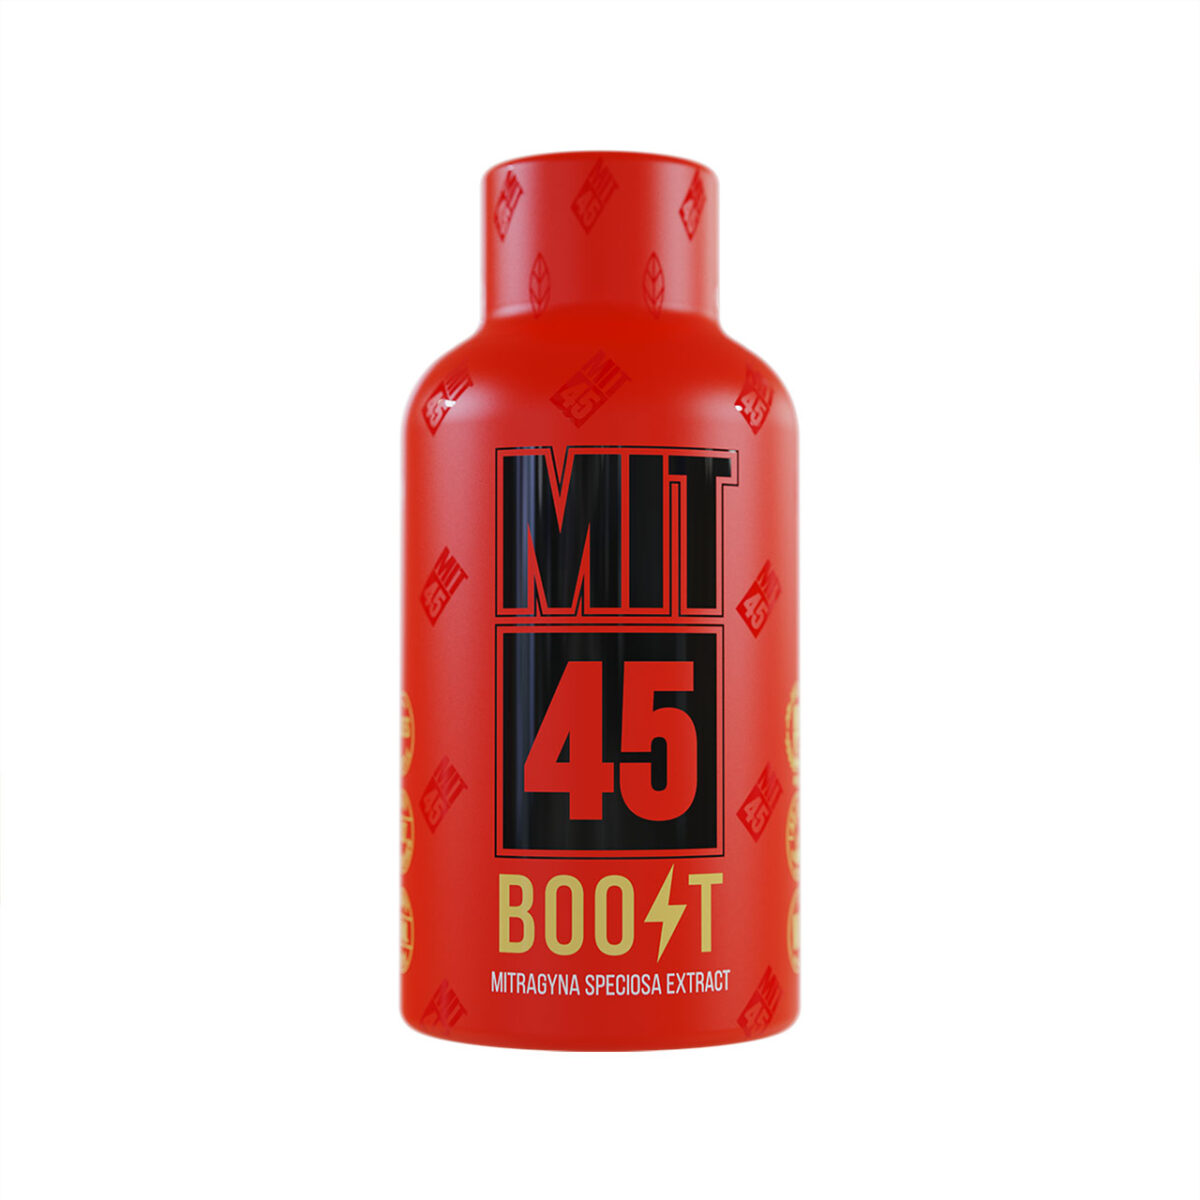 MIT 45 BOOST Kratom Extract Liquid Shot – 2oz